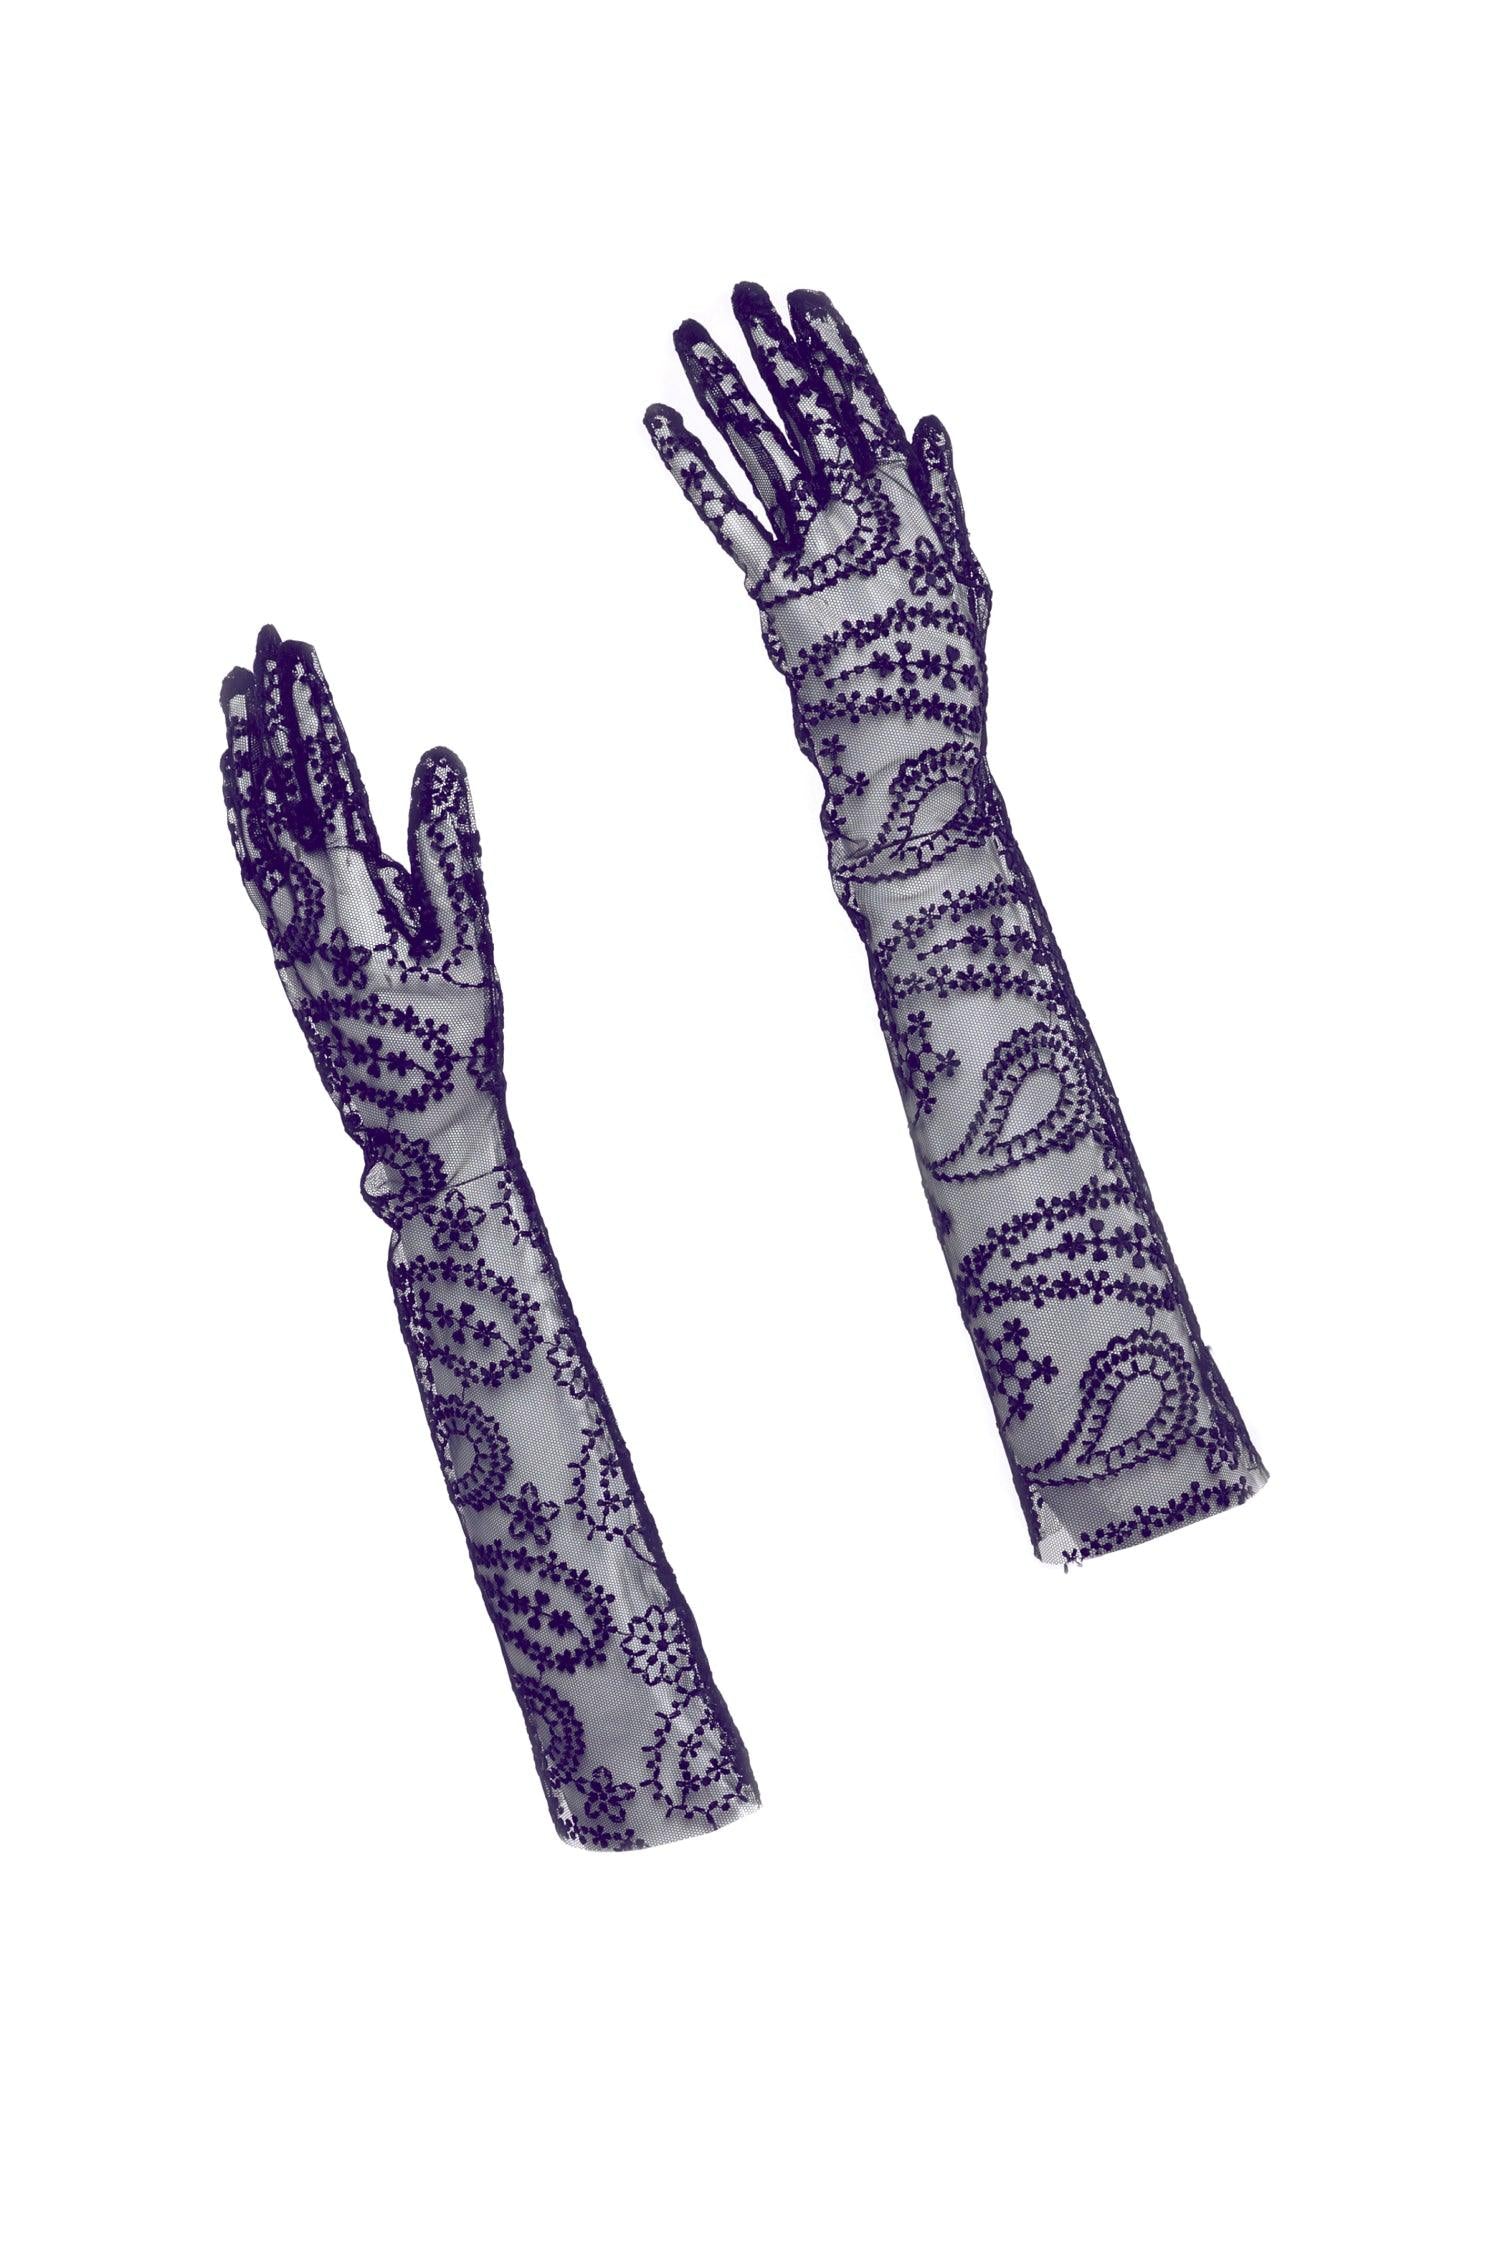 Maria-Theresien gloves - J I Λ atelier